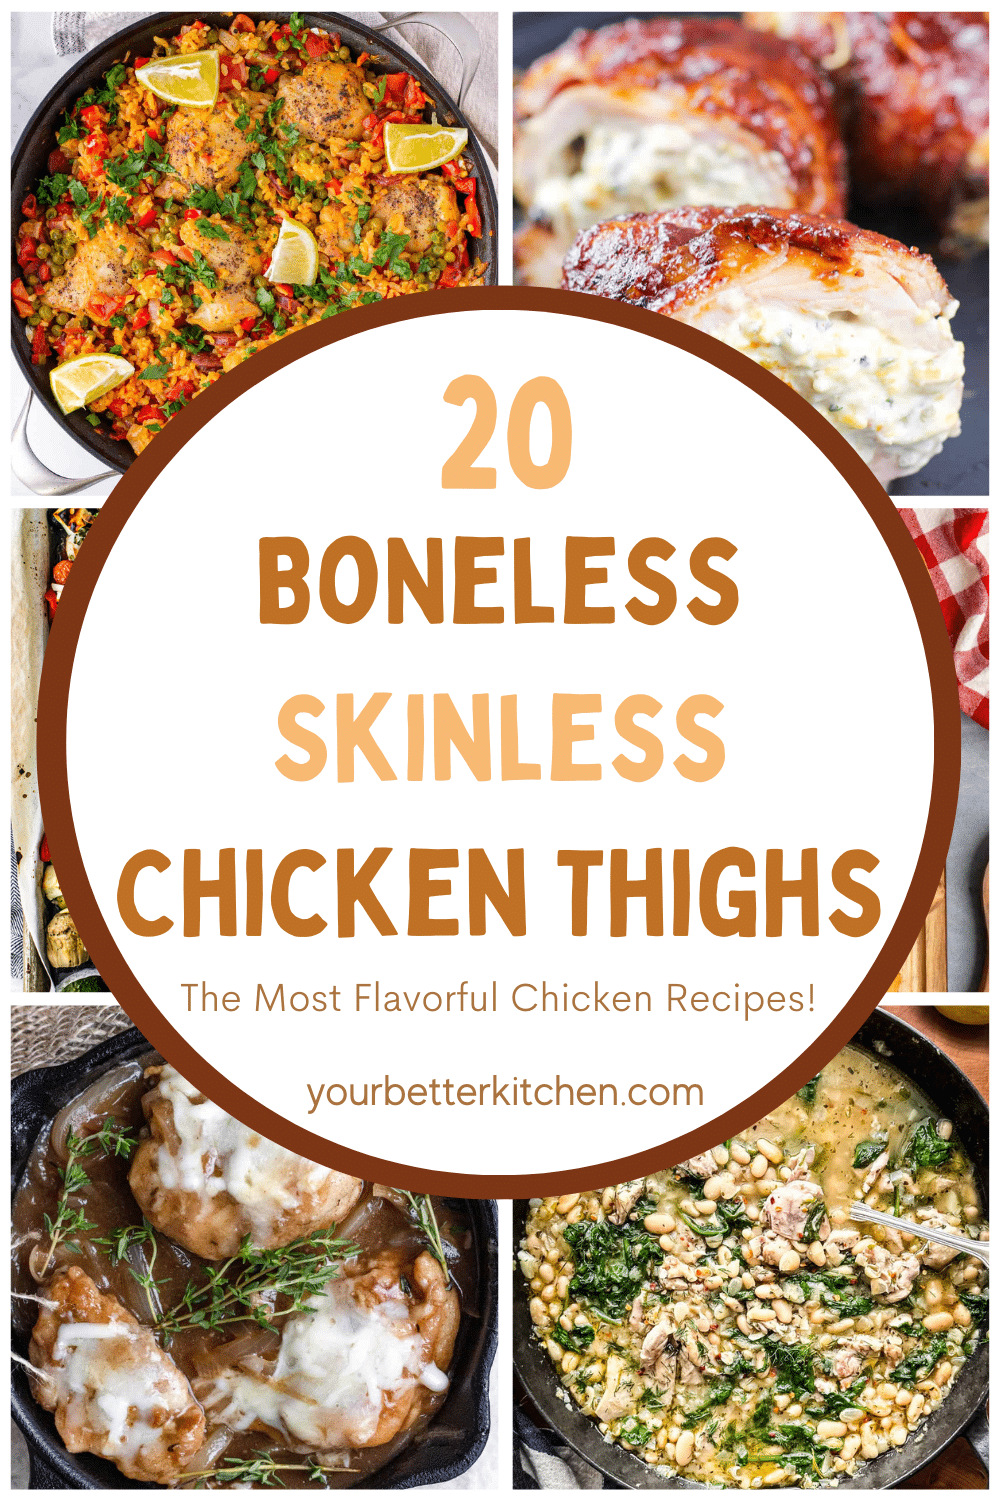 Pin image showing various boneless skinless chicken thigh recipes.